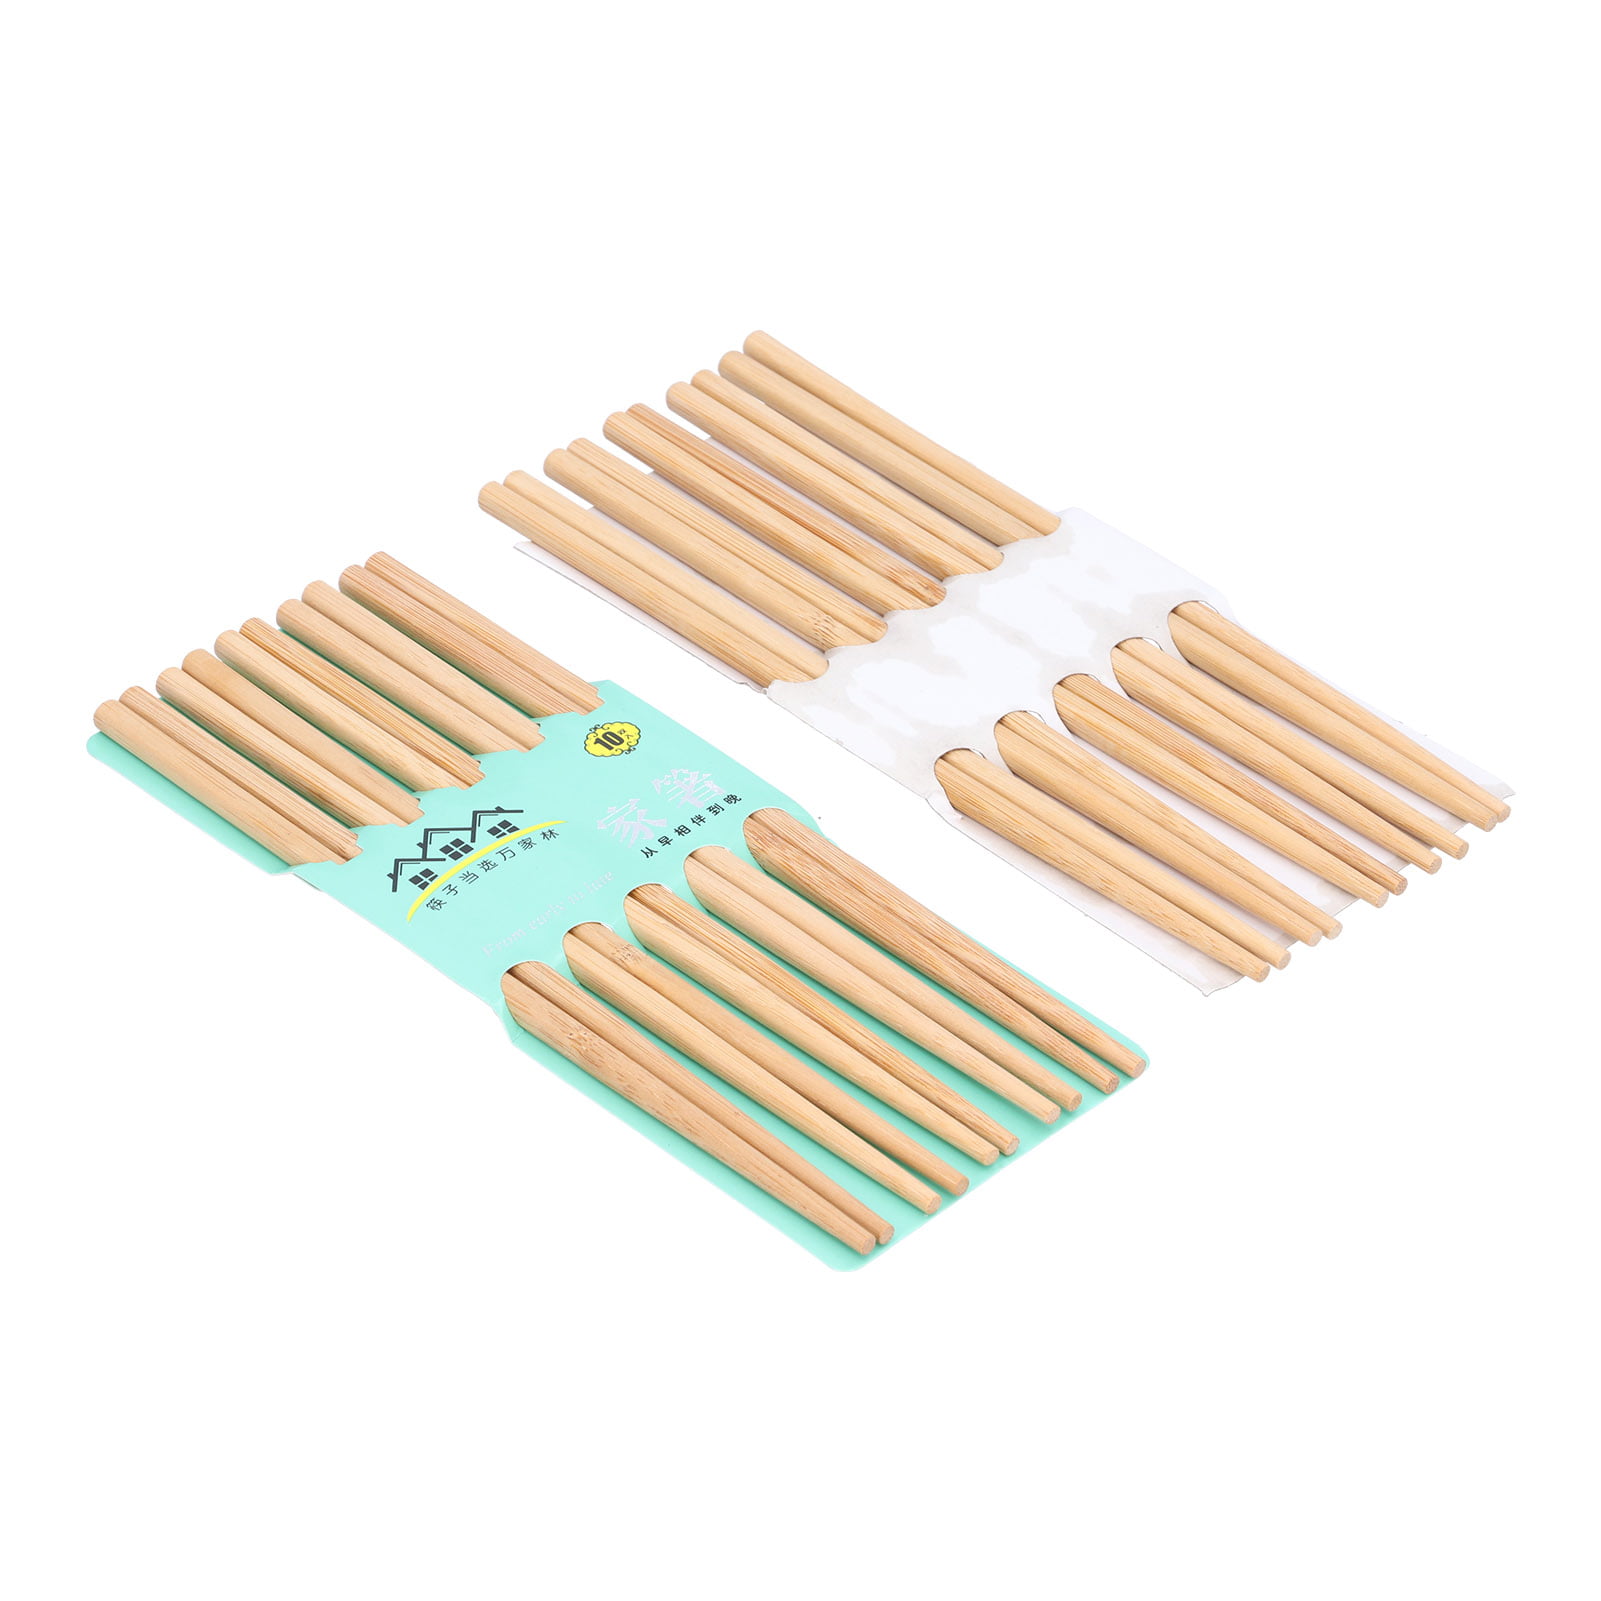 10 Pair Natural Bamboo Wooden Cooking Chopsticks 9.4in Long Reusable 